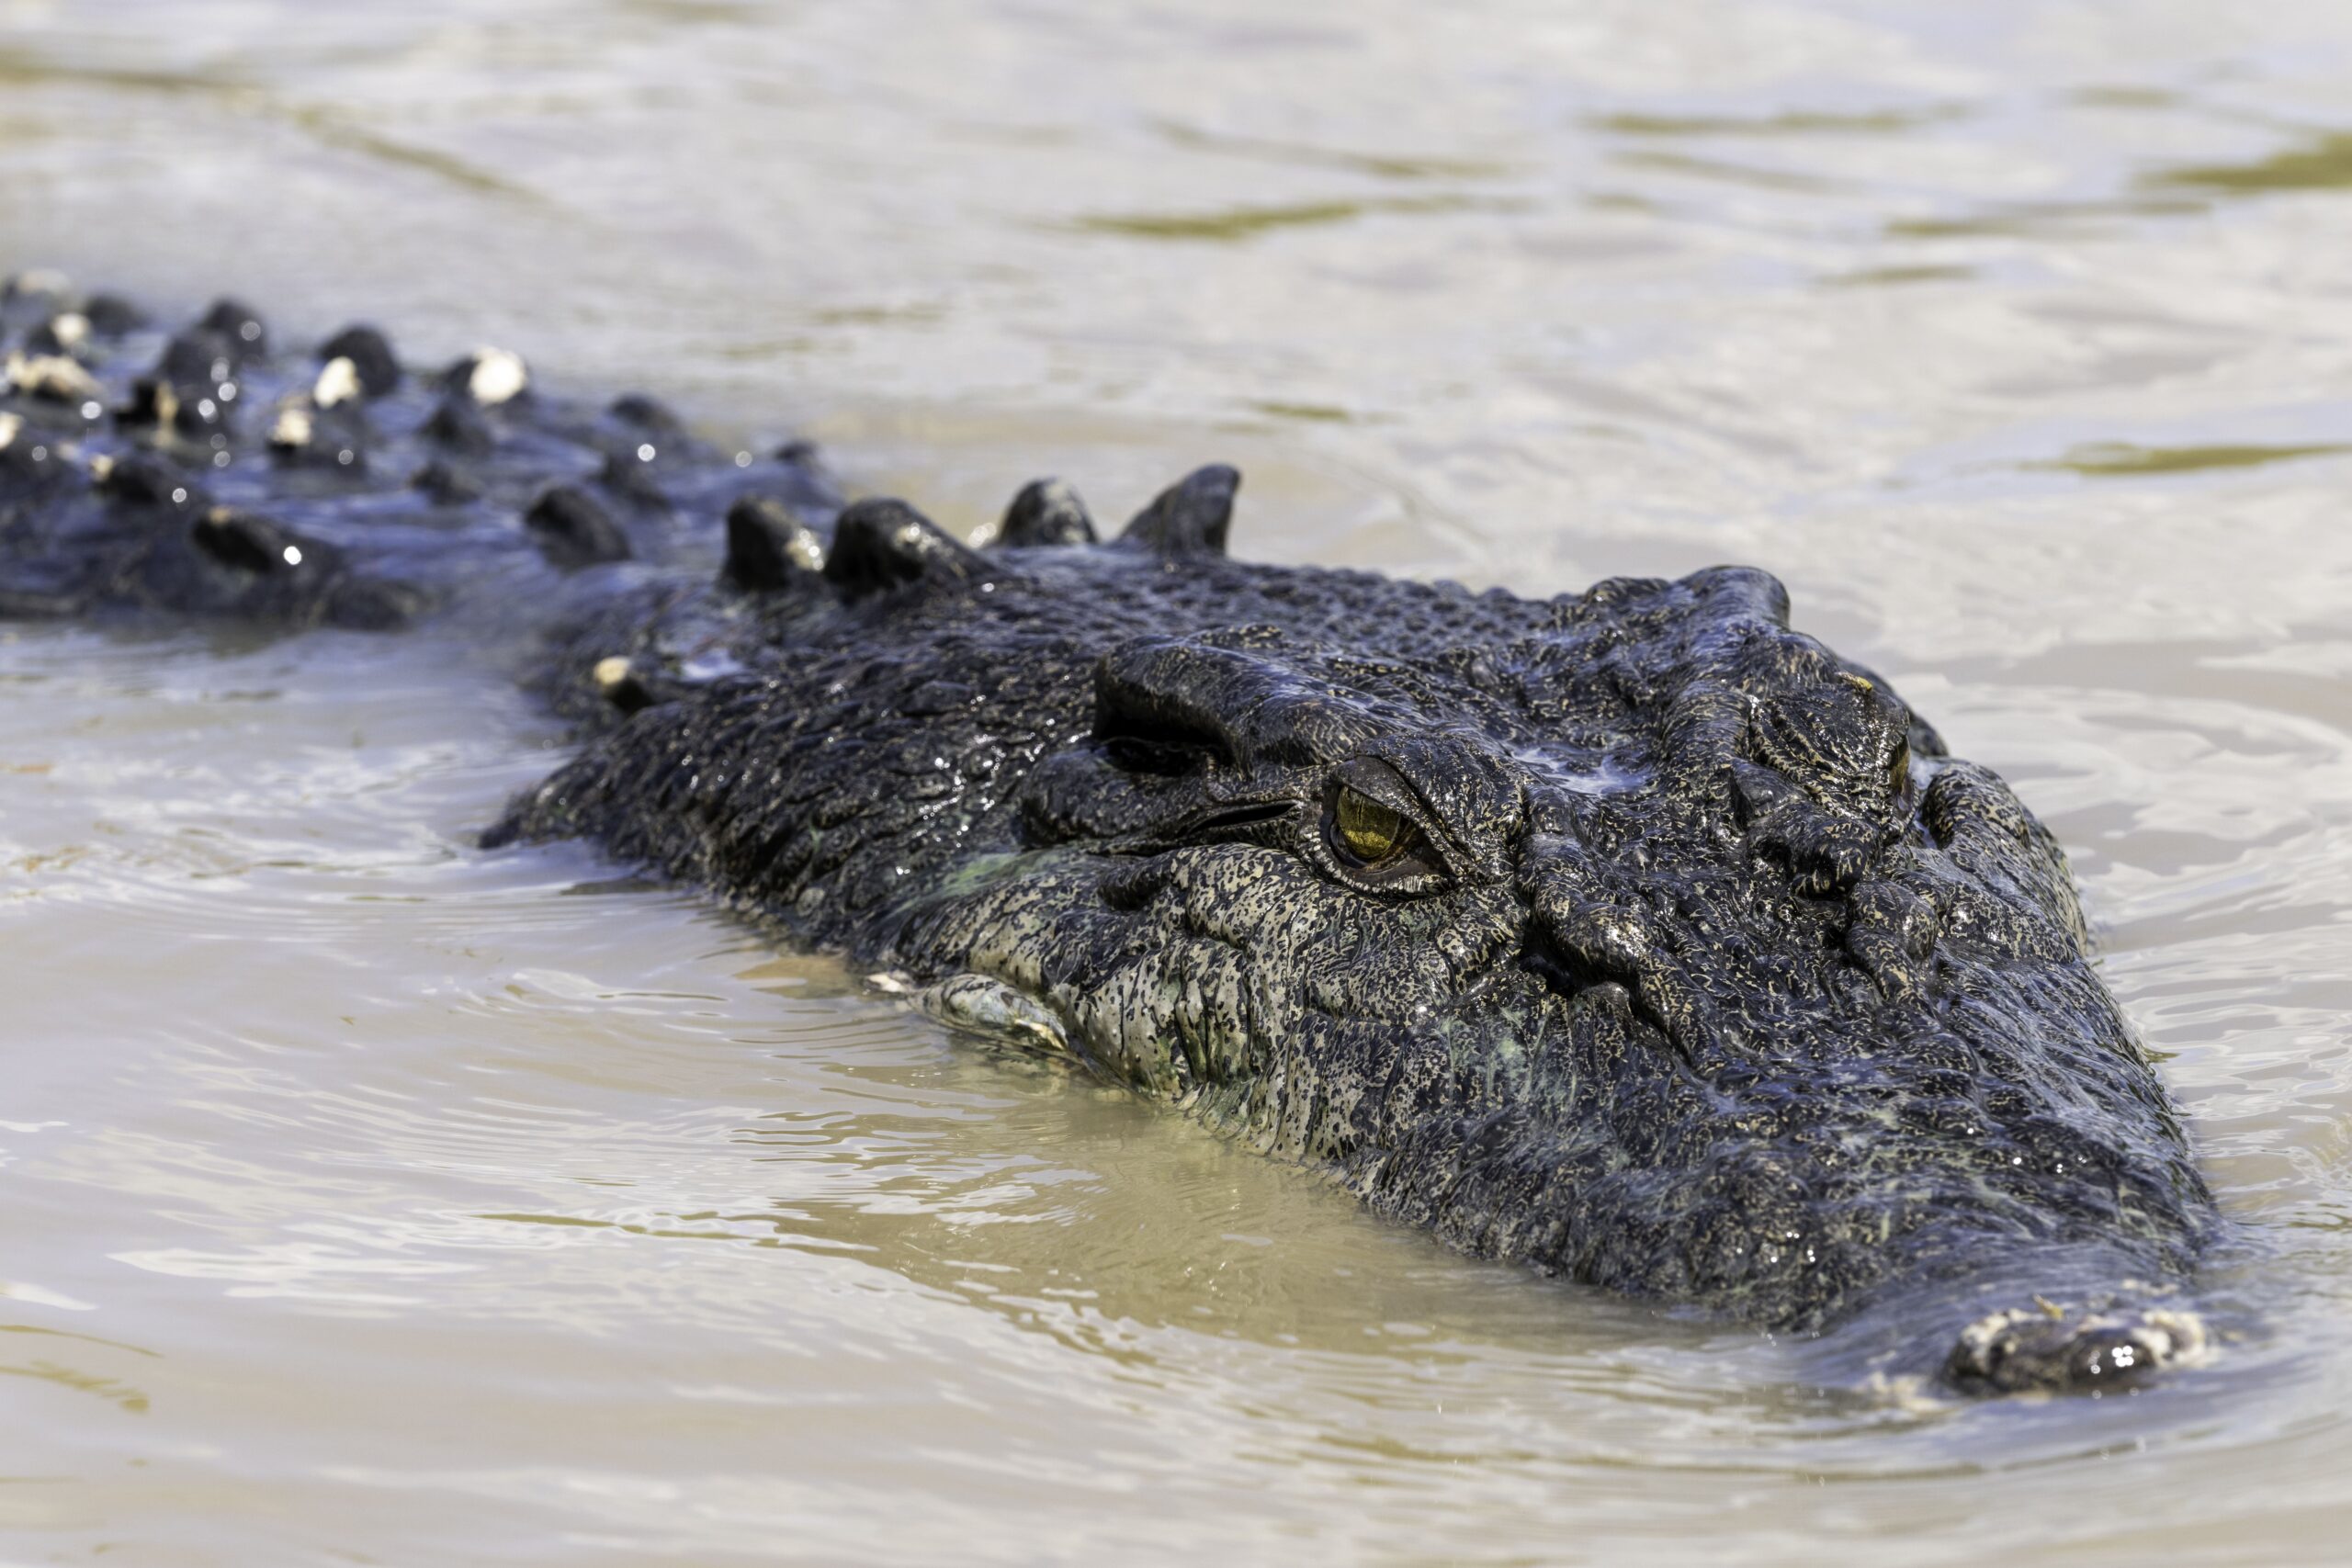 Autopia Tours: Jumping Crocodile Tour from Darwin